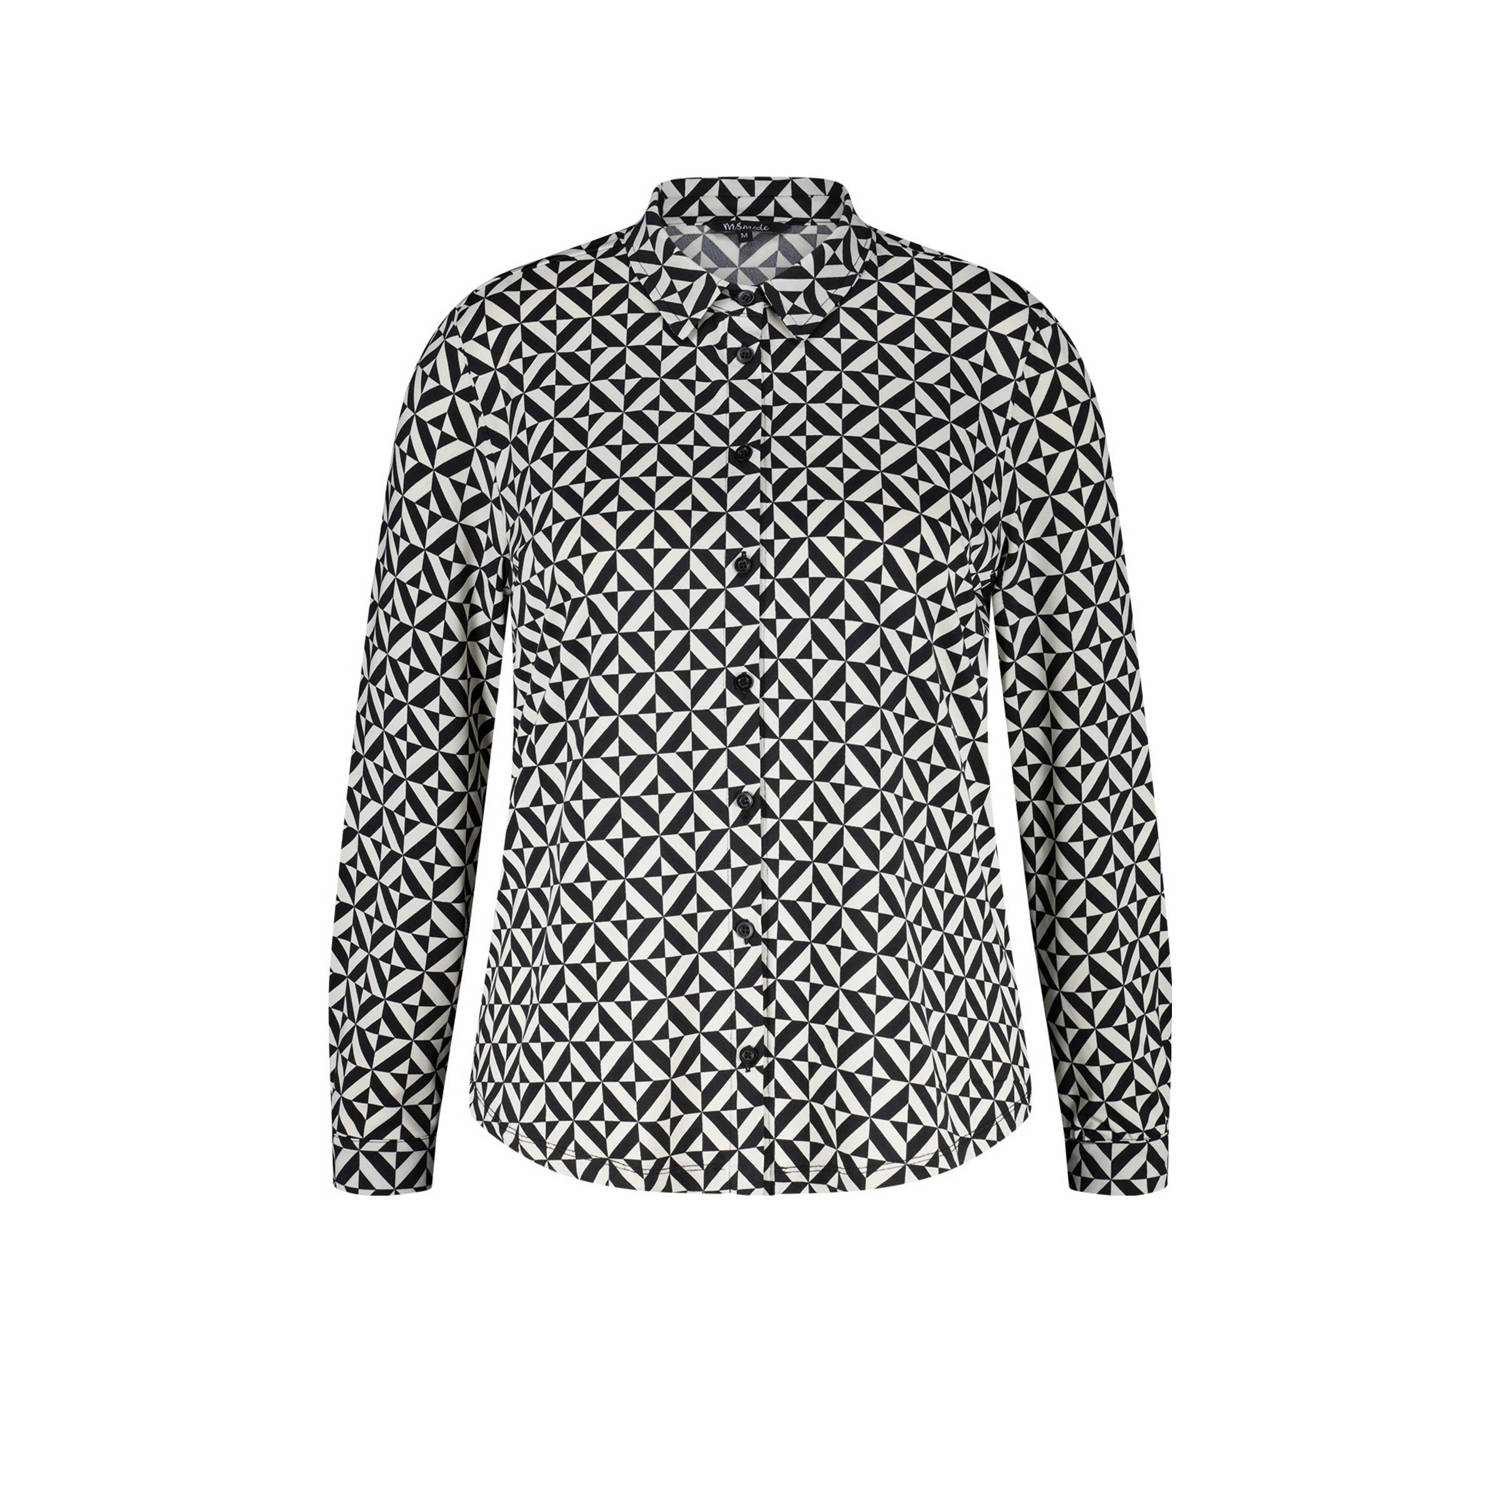 MS Mode blouse met all over print zwart wit